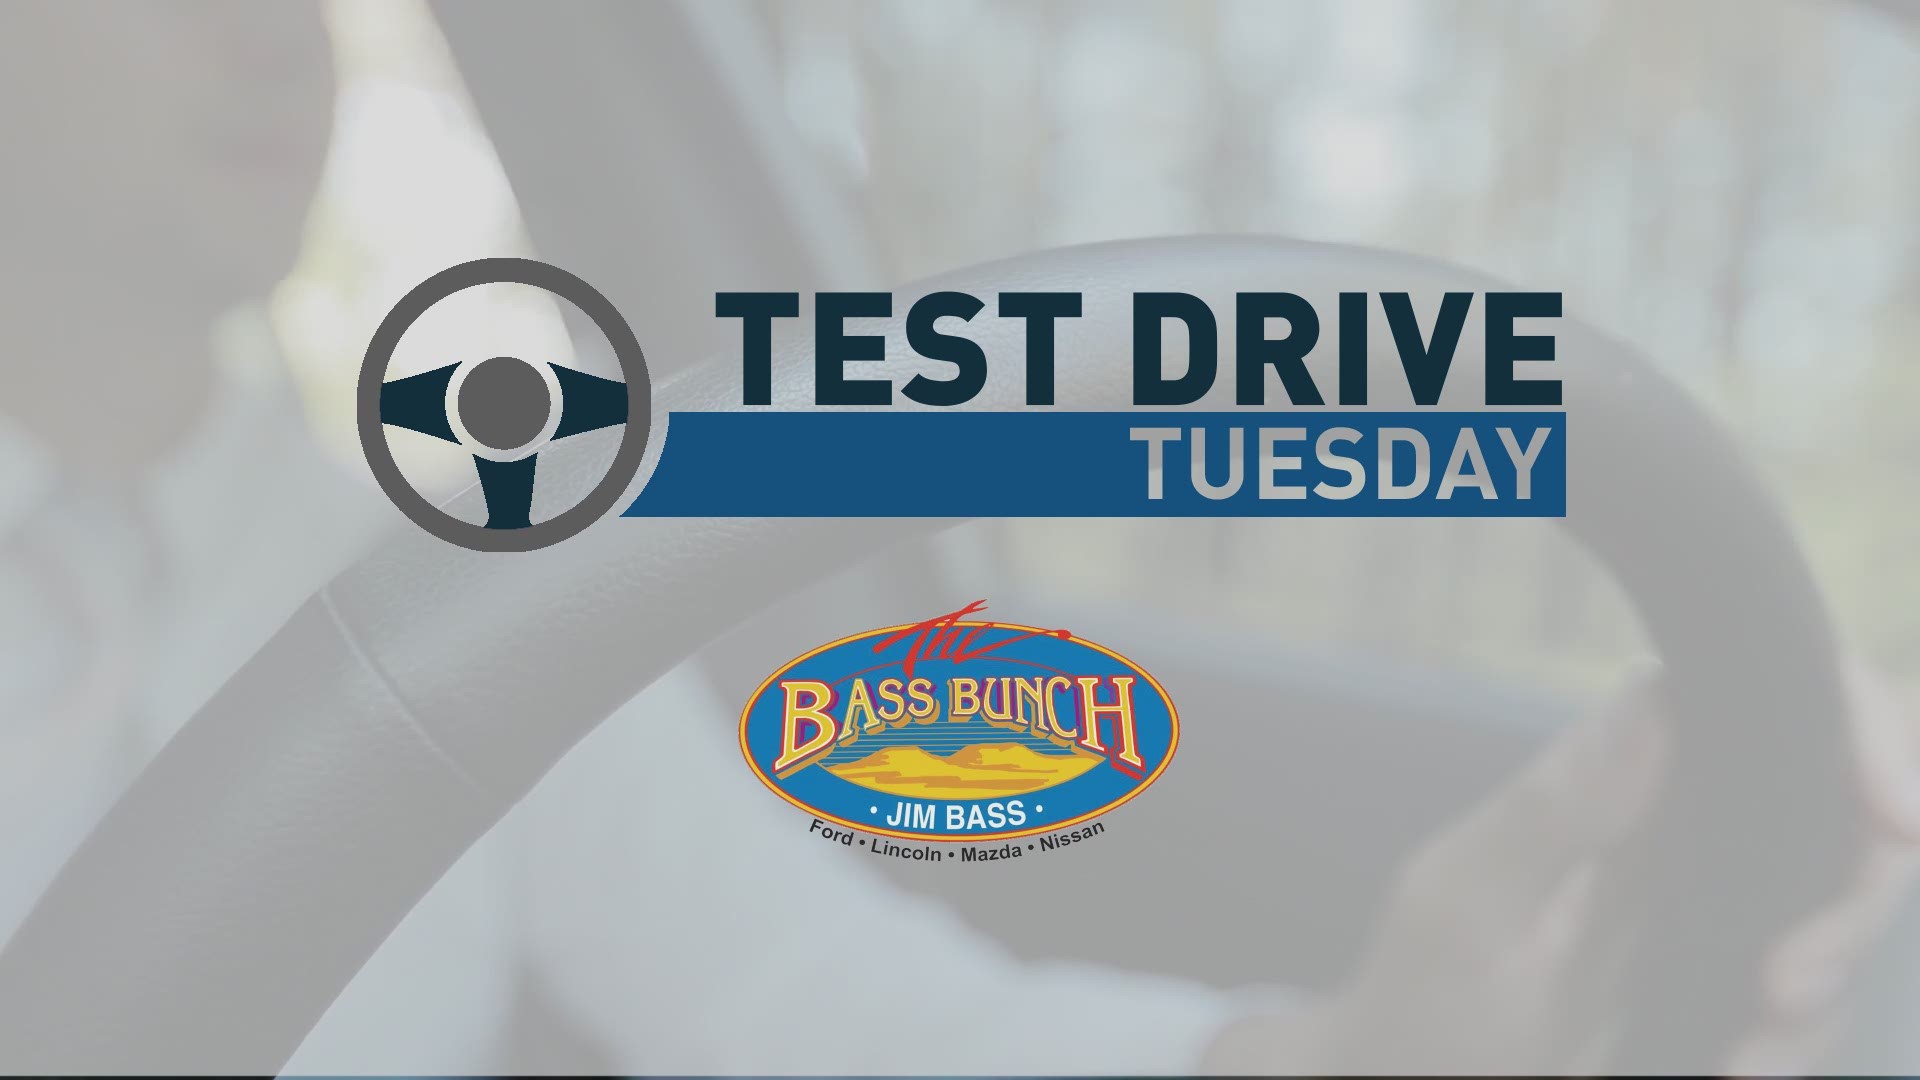 Test Drive Tuesday Kicks